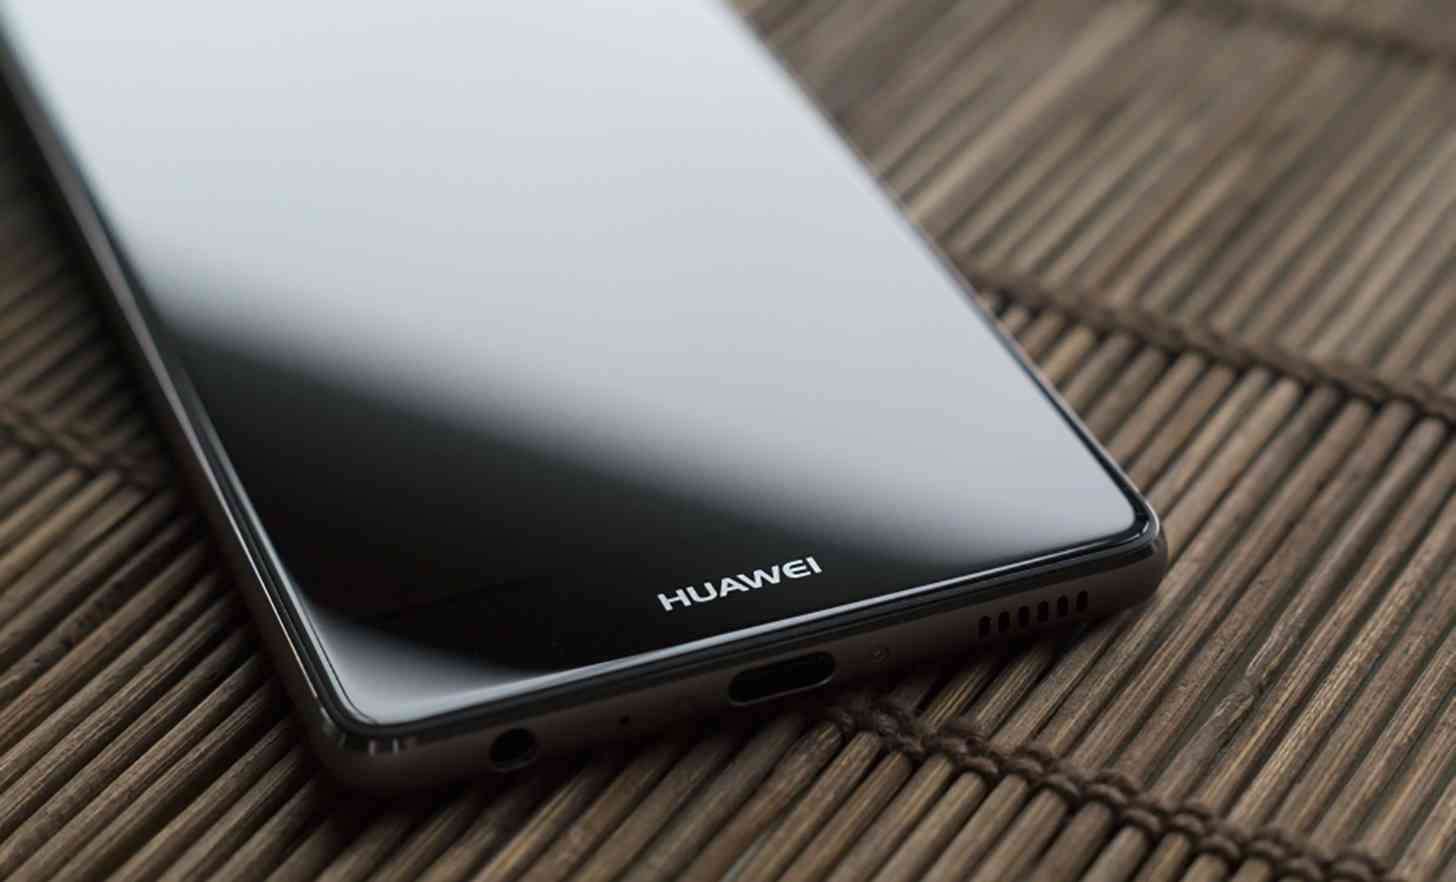 Huawei logo P9 hands-on